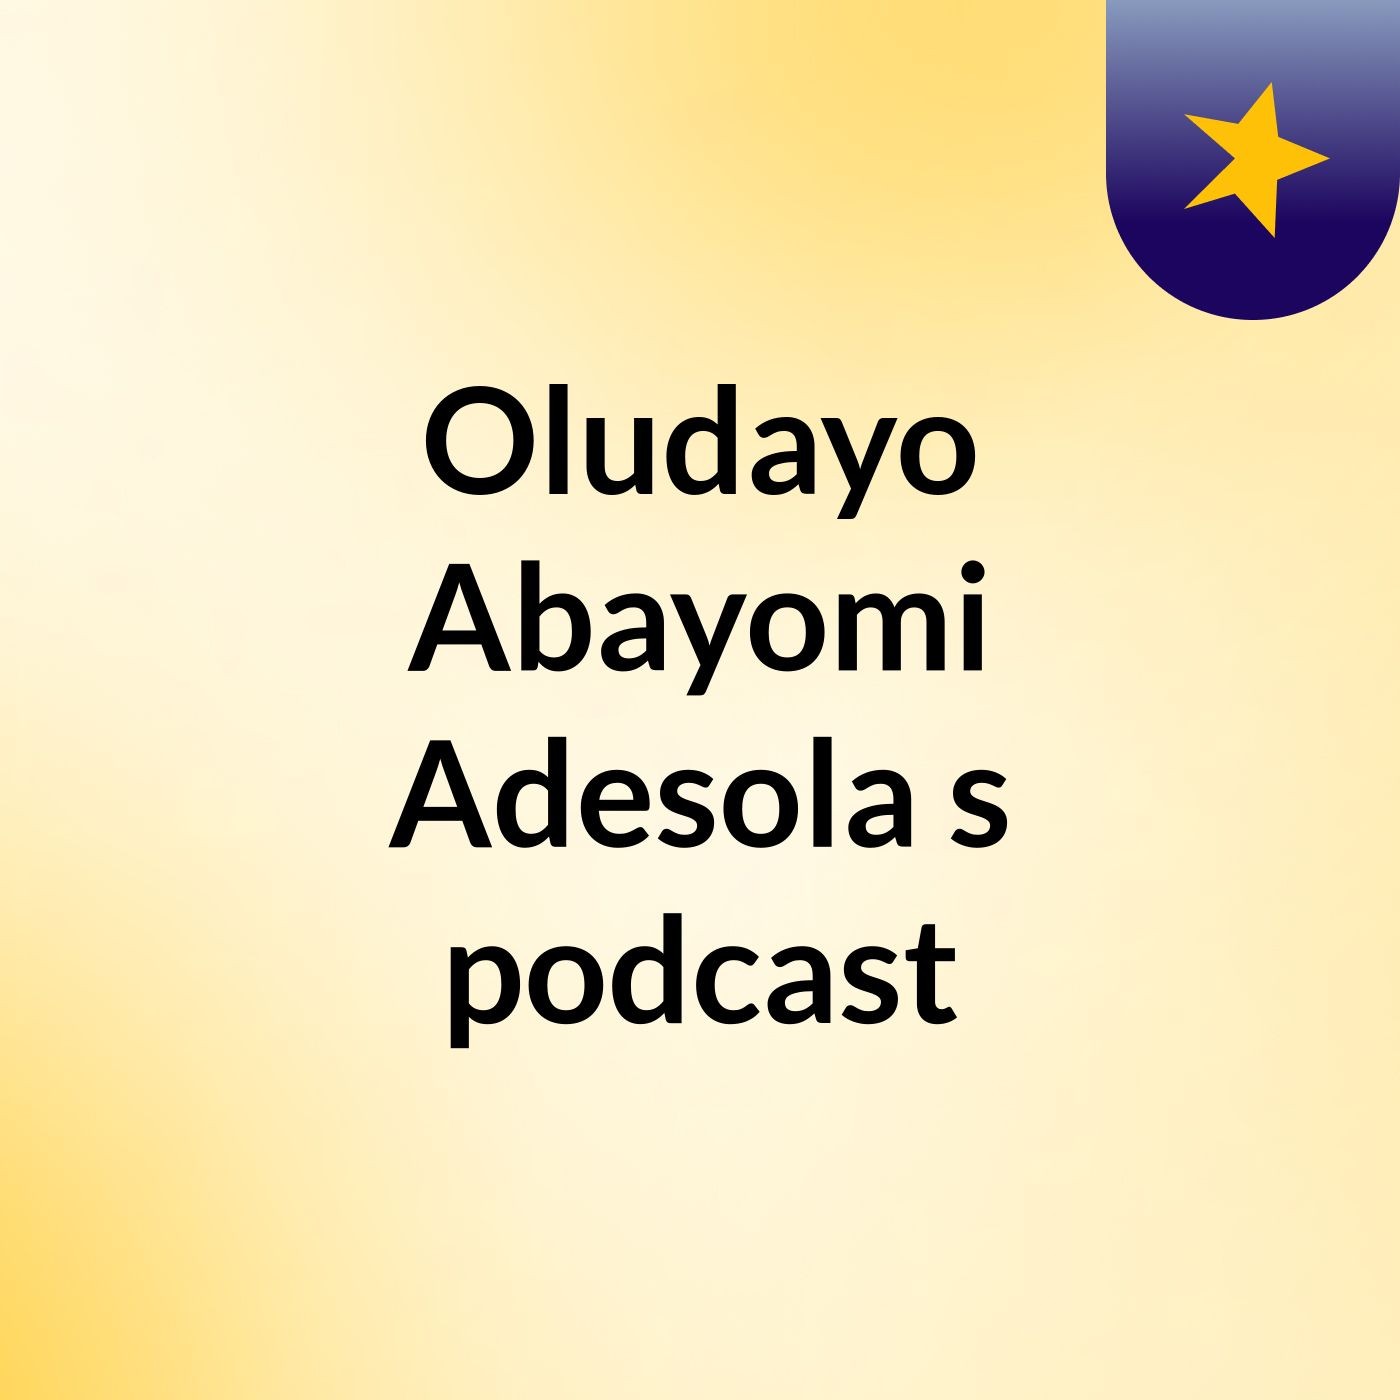 Oludayo Abayomi Adesola's podcast